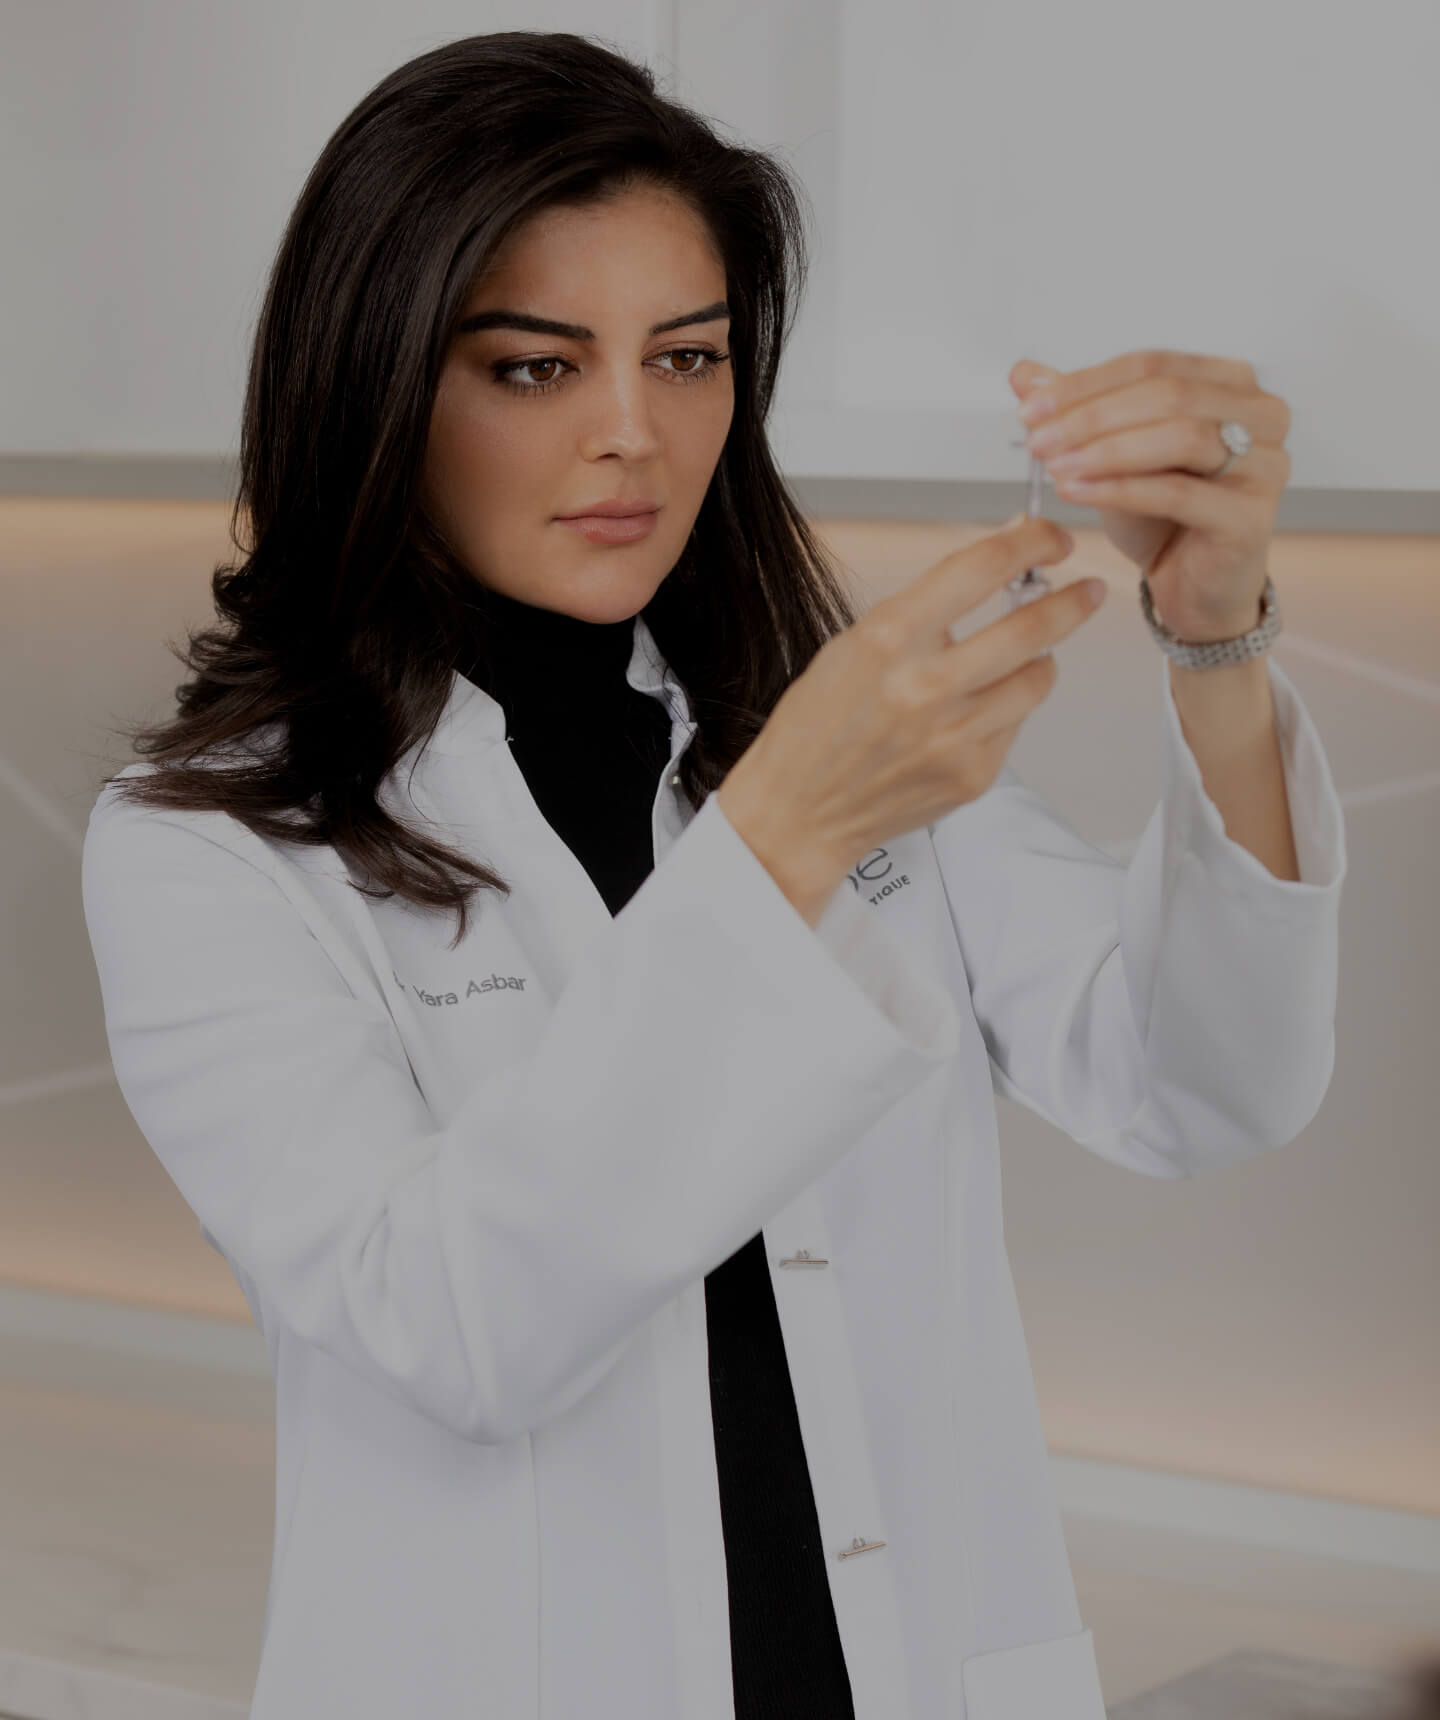 Dr. Yara Asbar preparing a syringe of neuromodulators before seeing her next patient